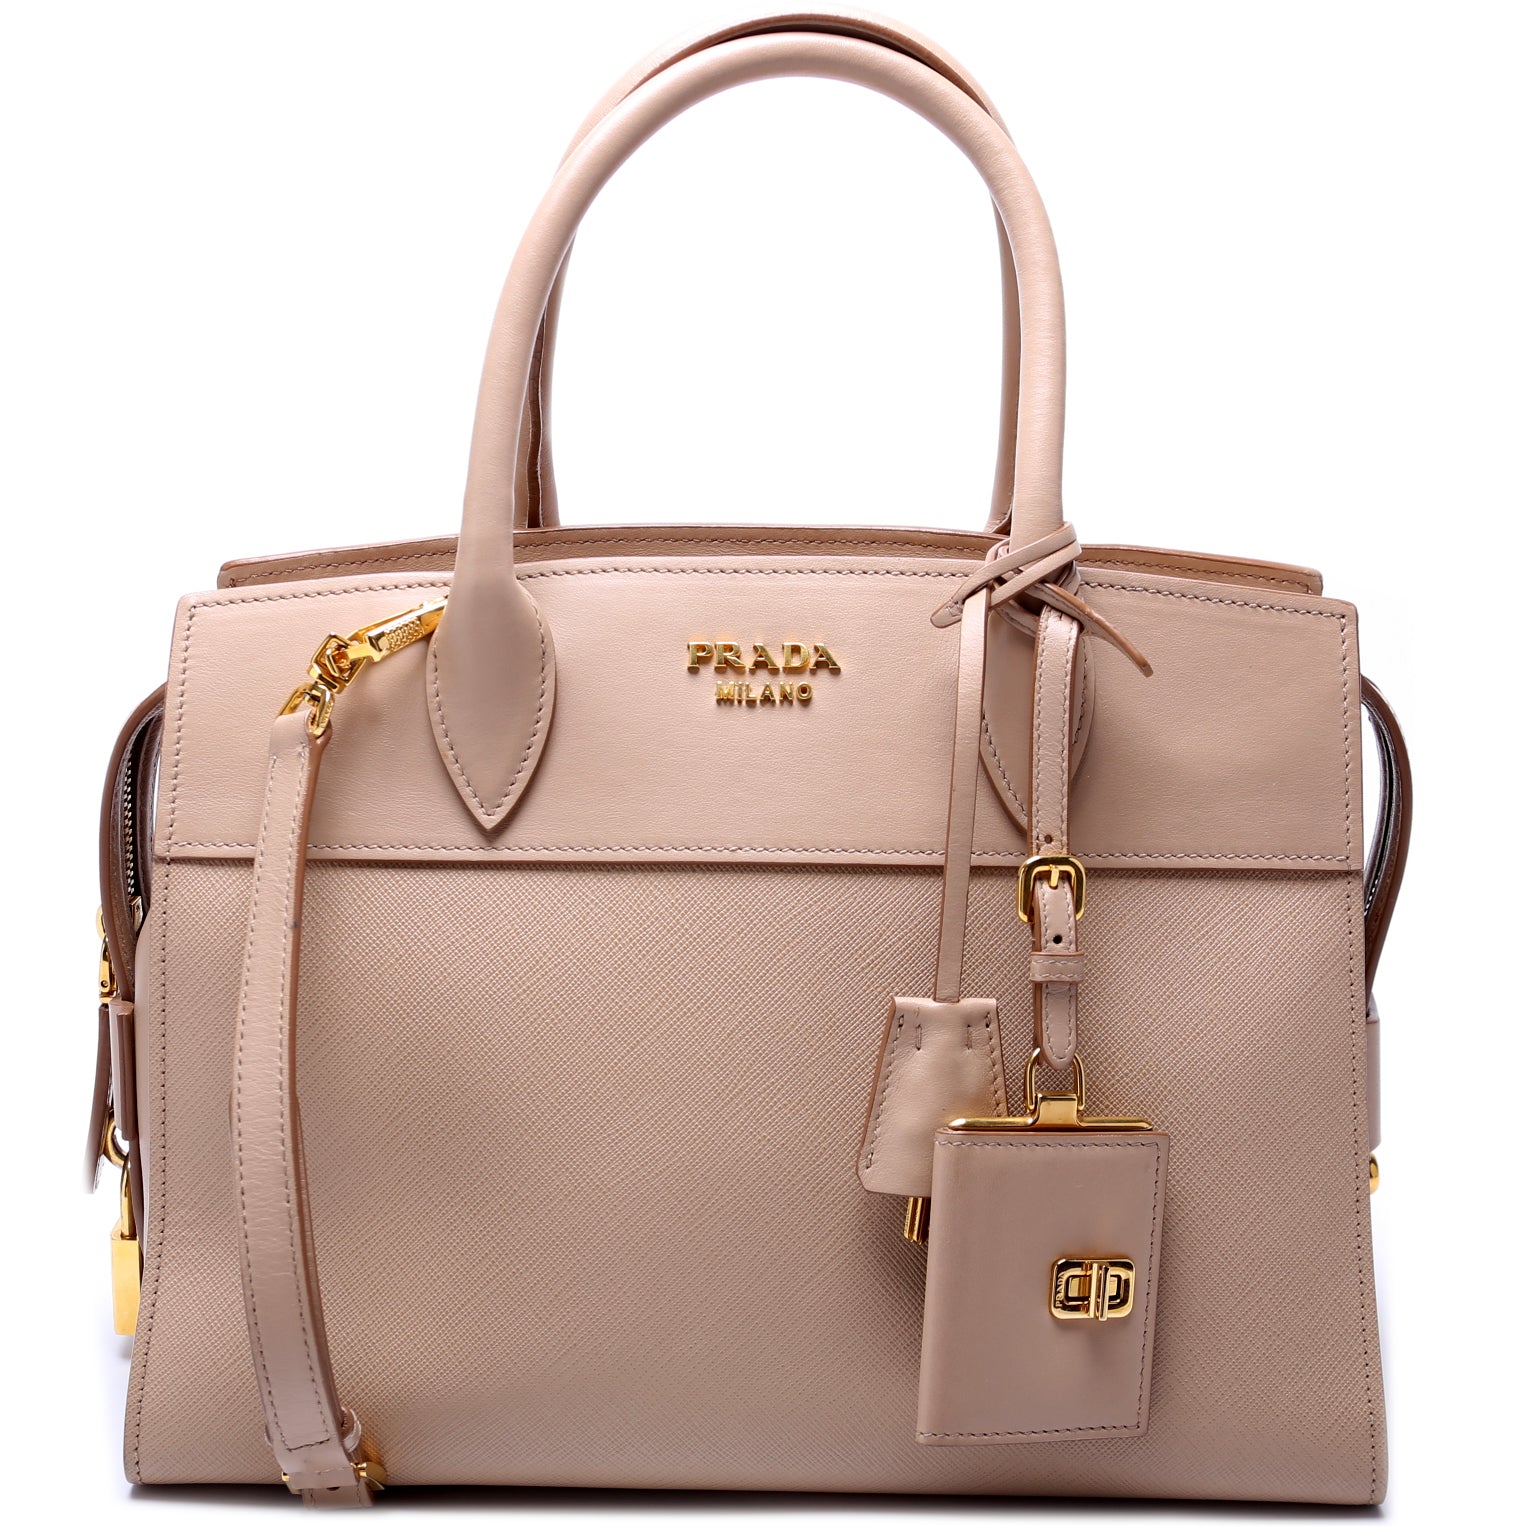 Prada Authenticated Esplanade Handbag